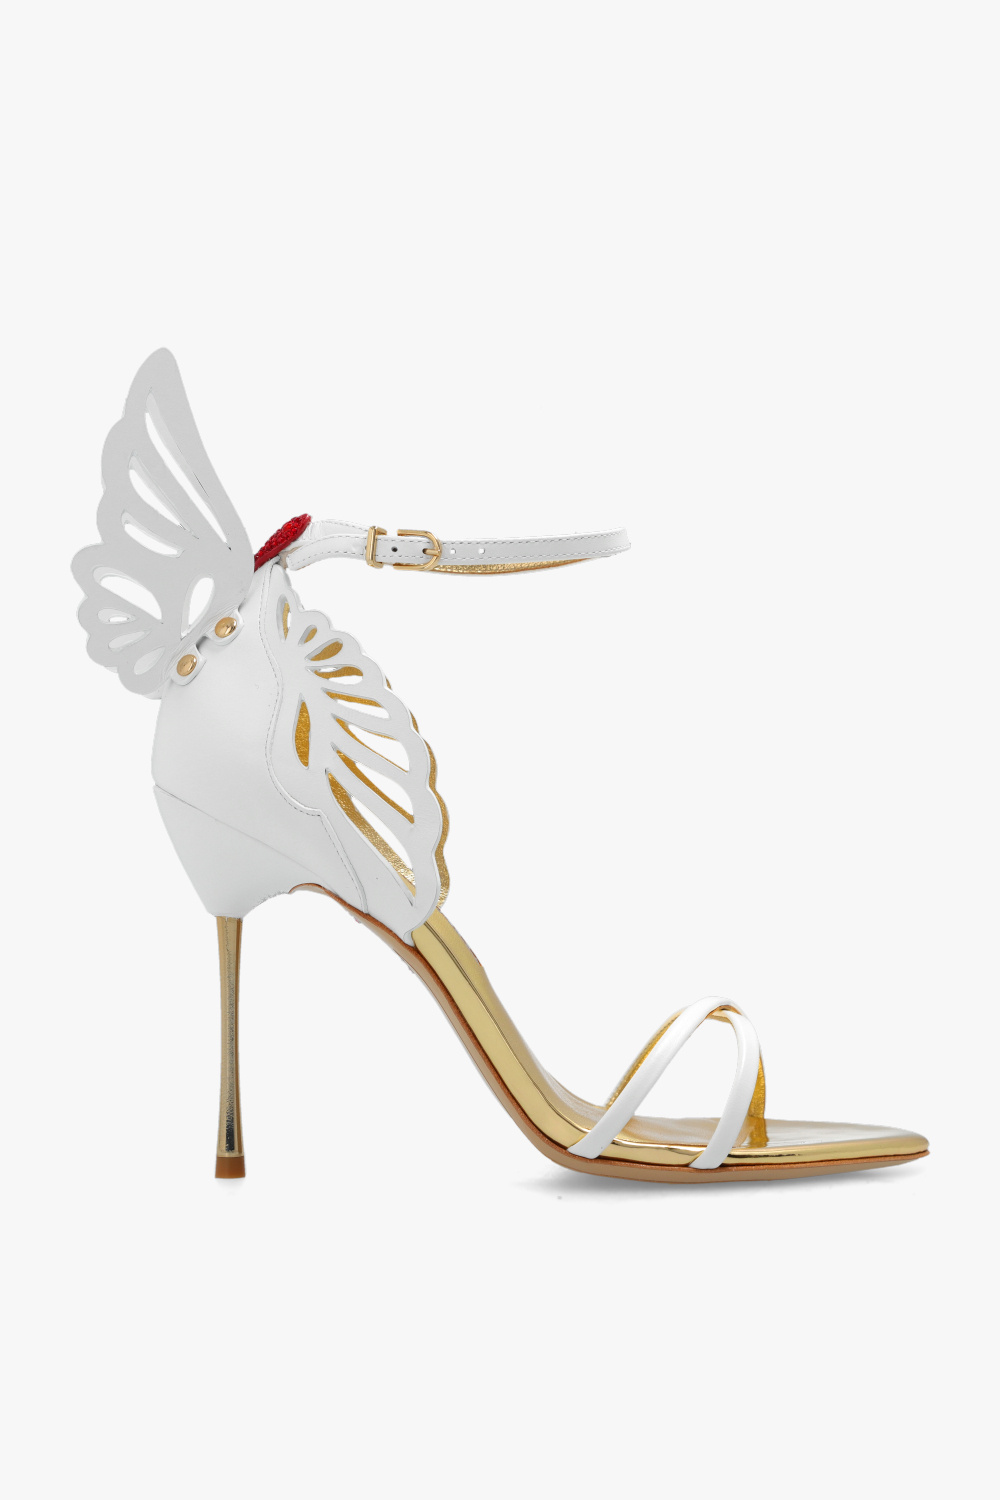 Sophia Webster ‘Heavenly’ heeled sandals